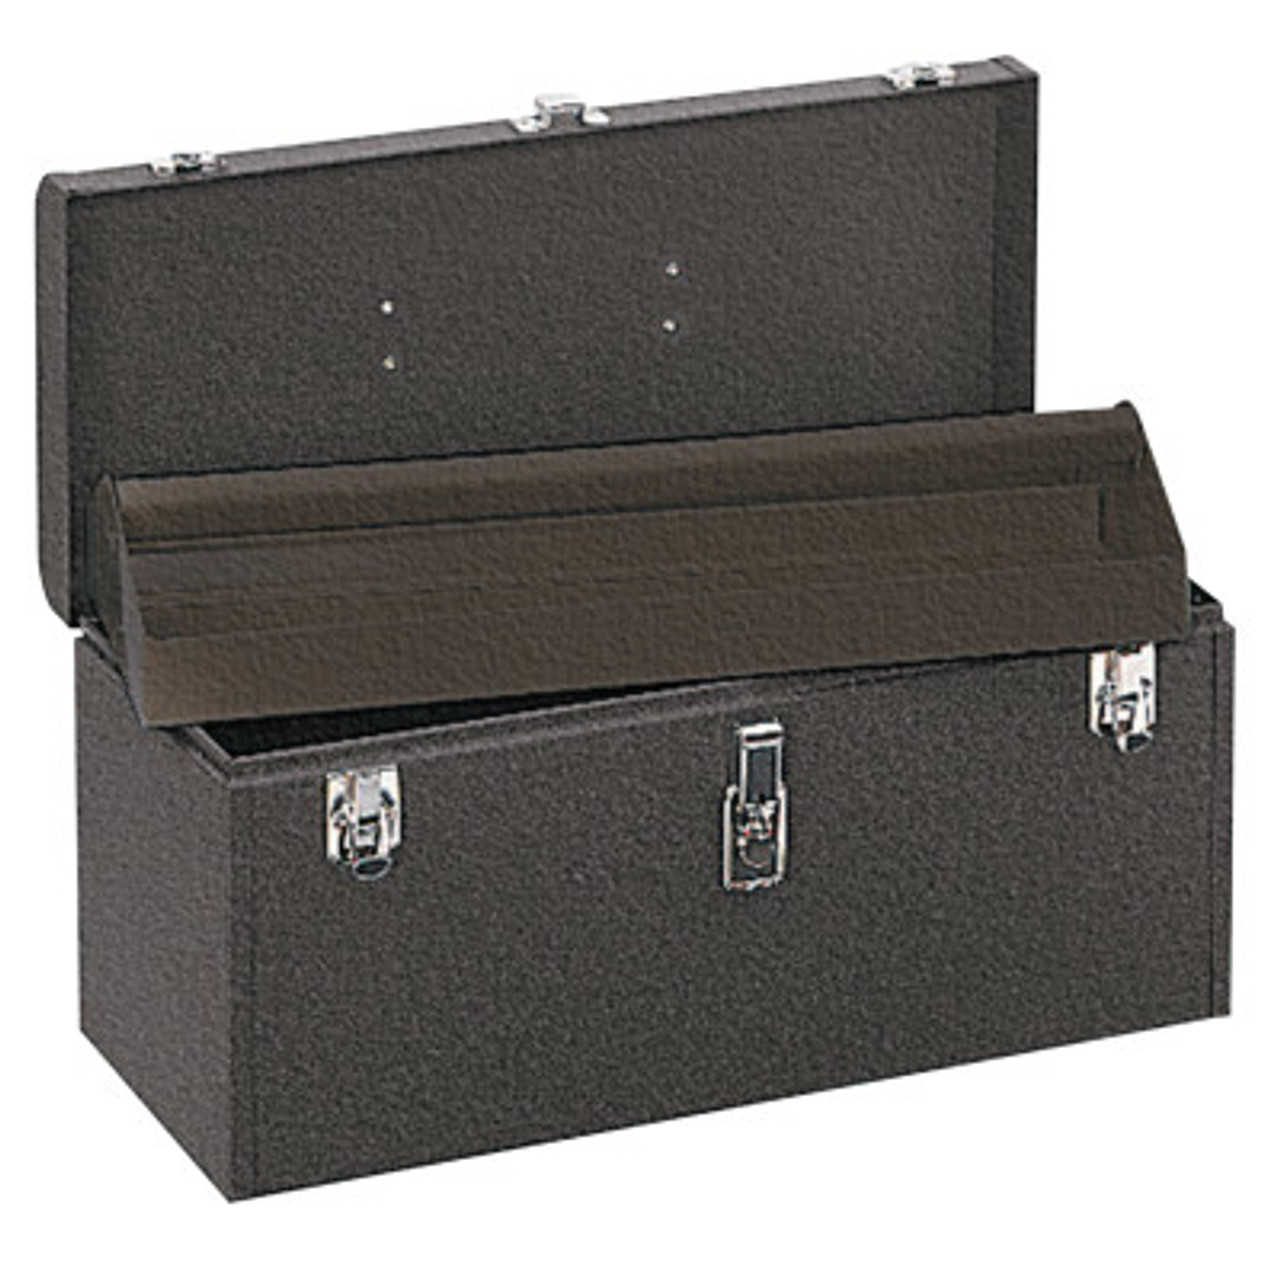 Kennedy 20 Professional Tool Box, Brown, 1/EA